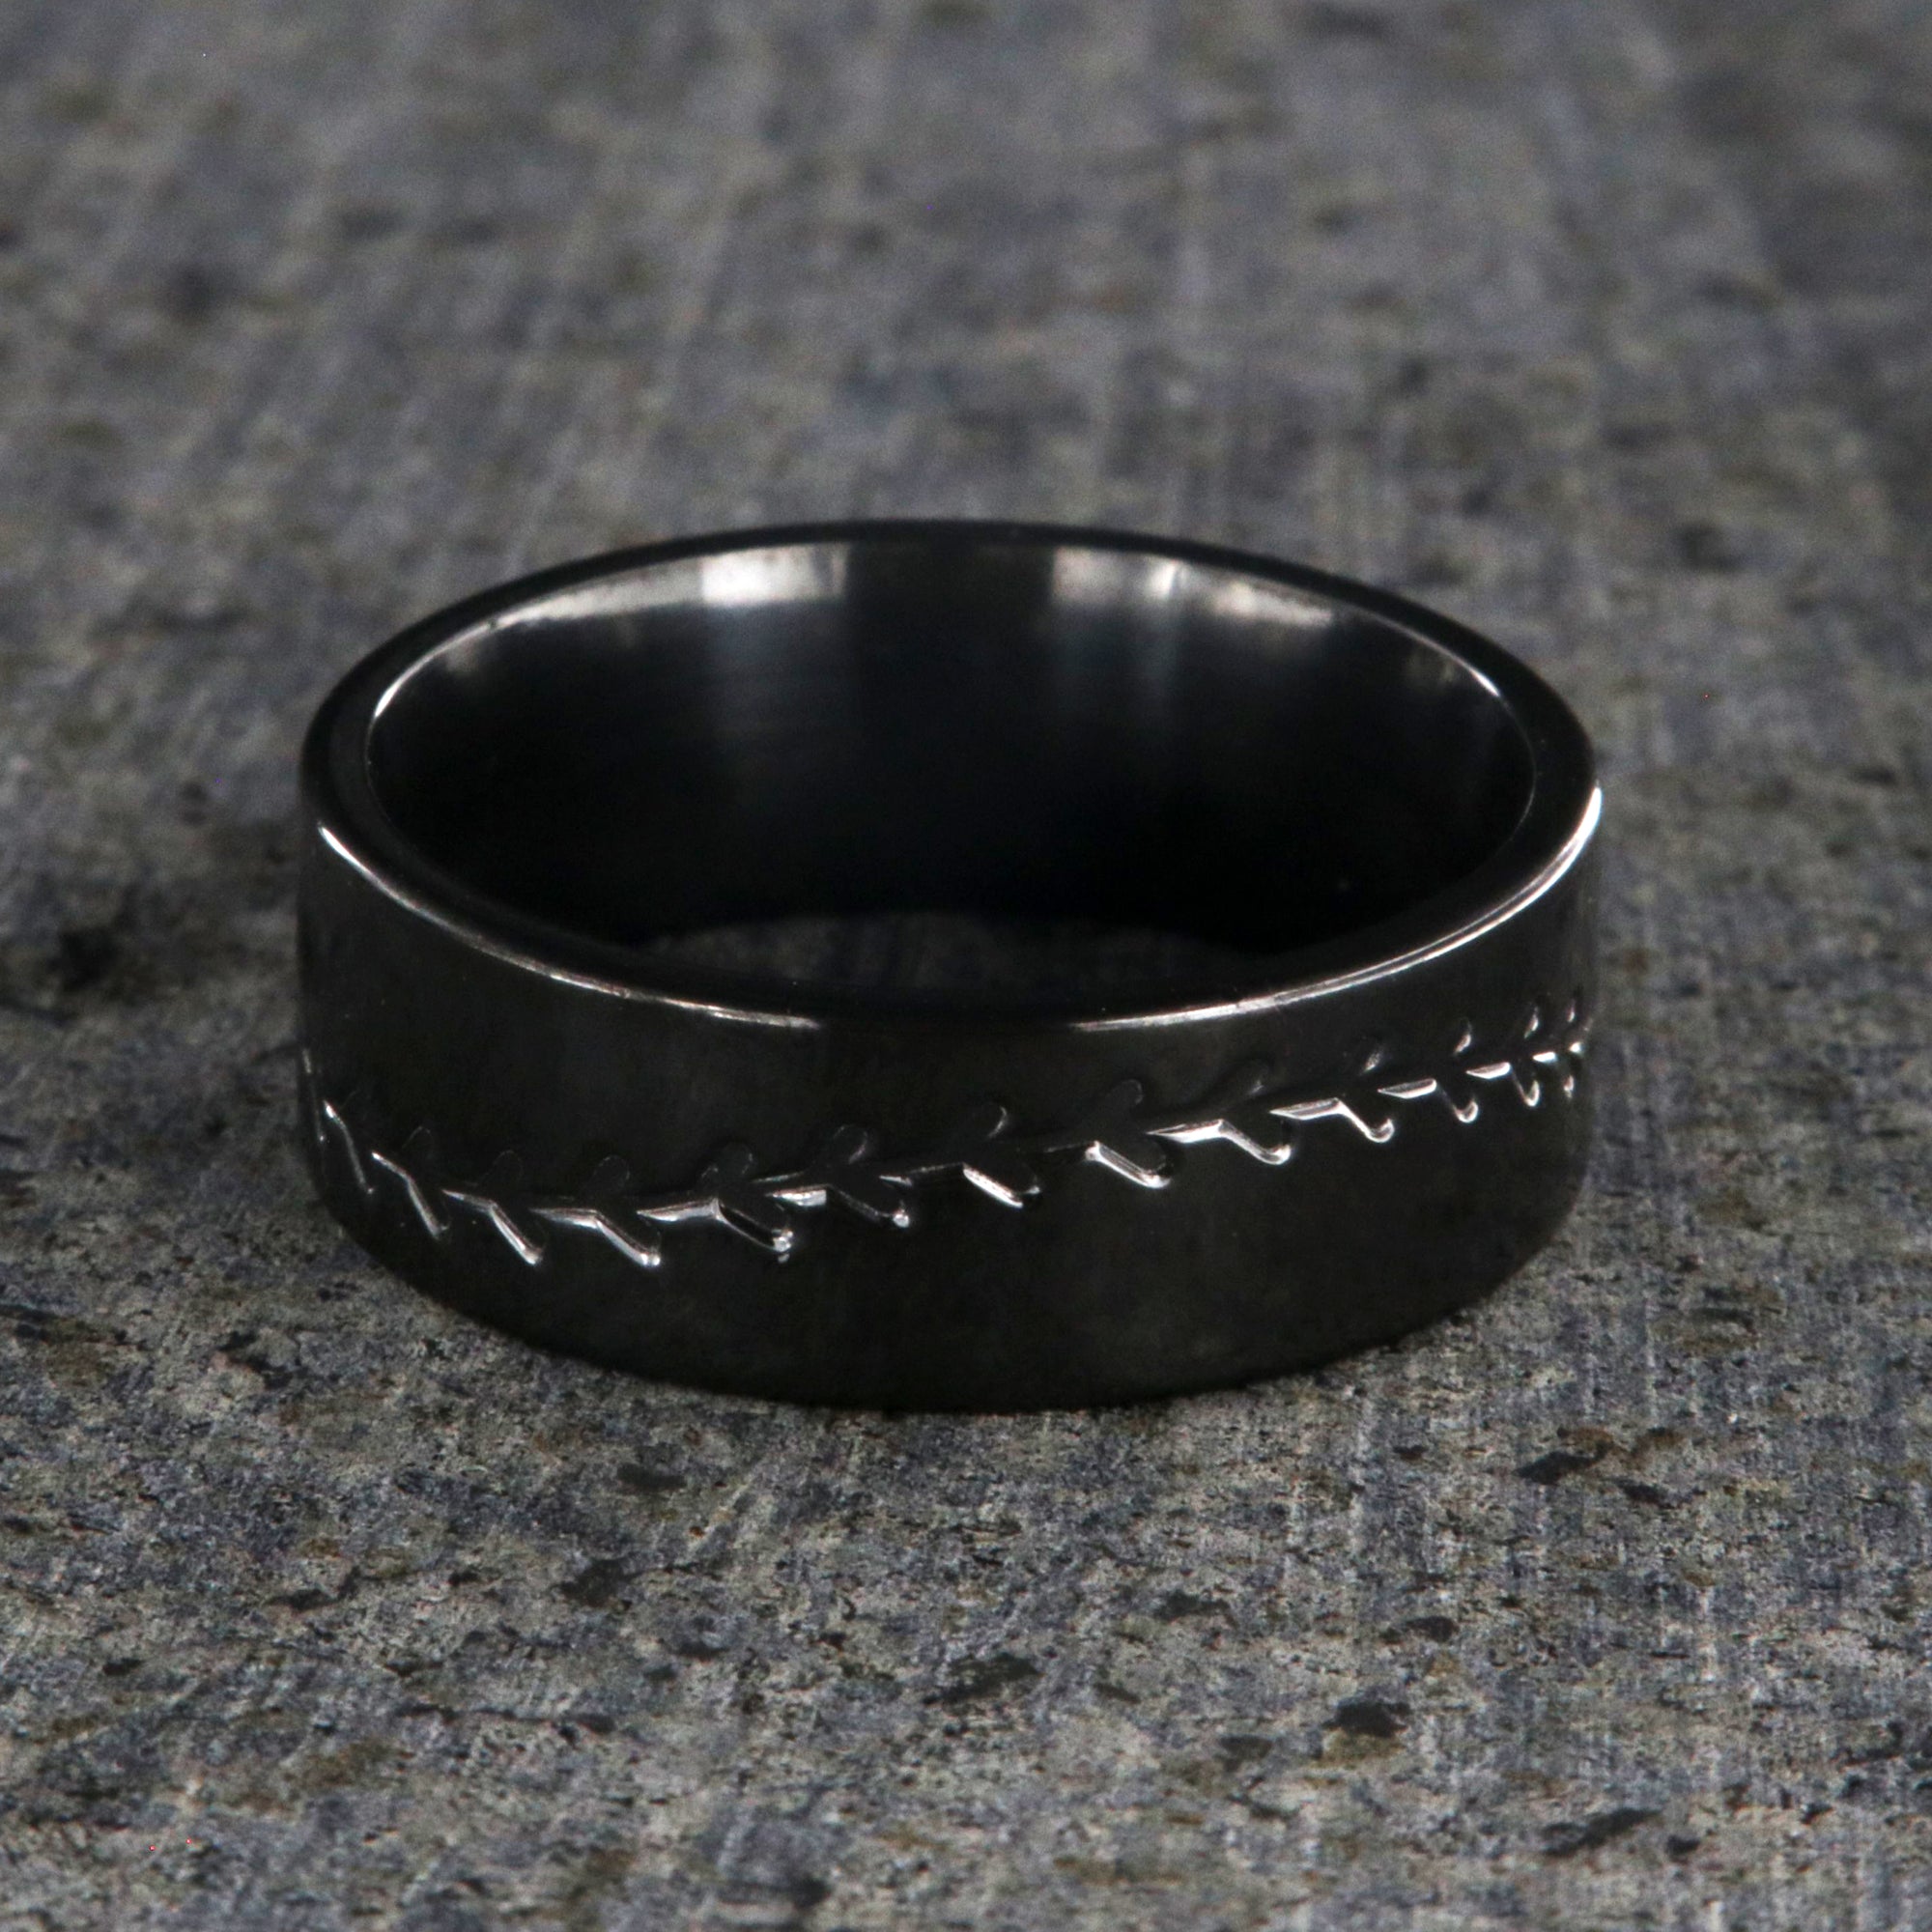 8mm wide black zirconium baseball ring with milled baseball stitiching